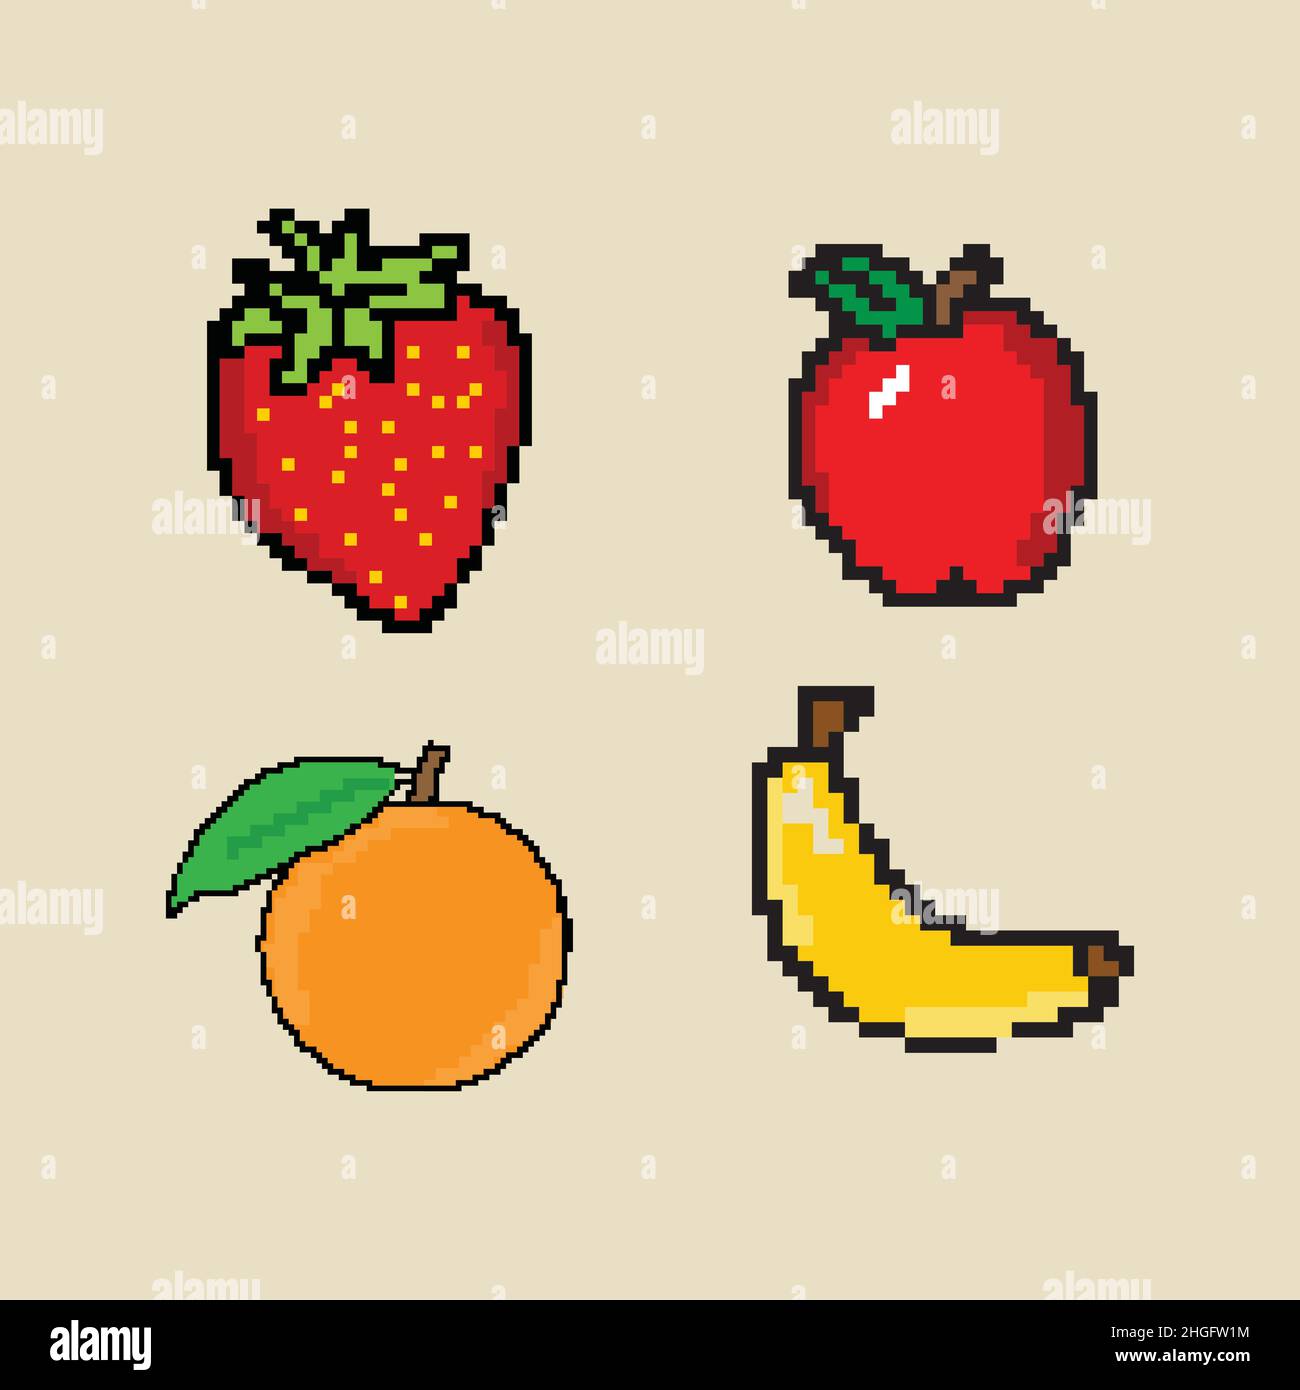 Fruits pixel art icons set apple orange strawberry banana isolated vector illustration.EPS 10 Stock Vector